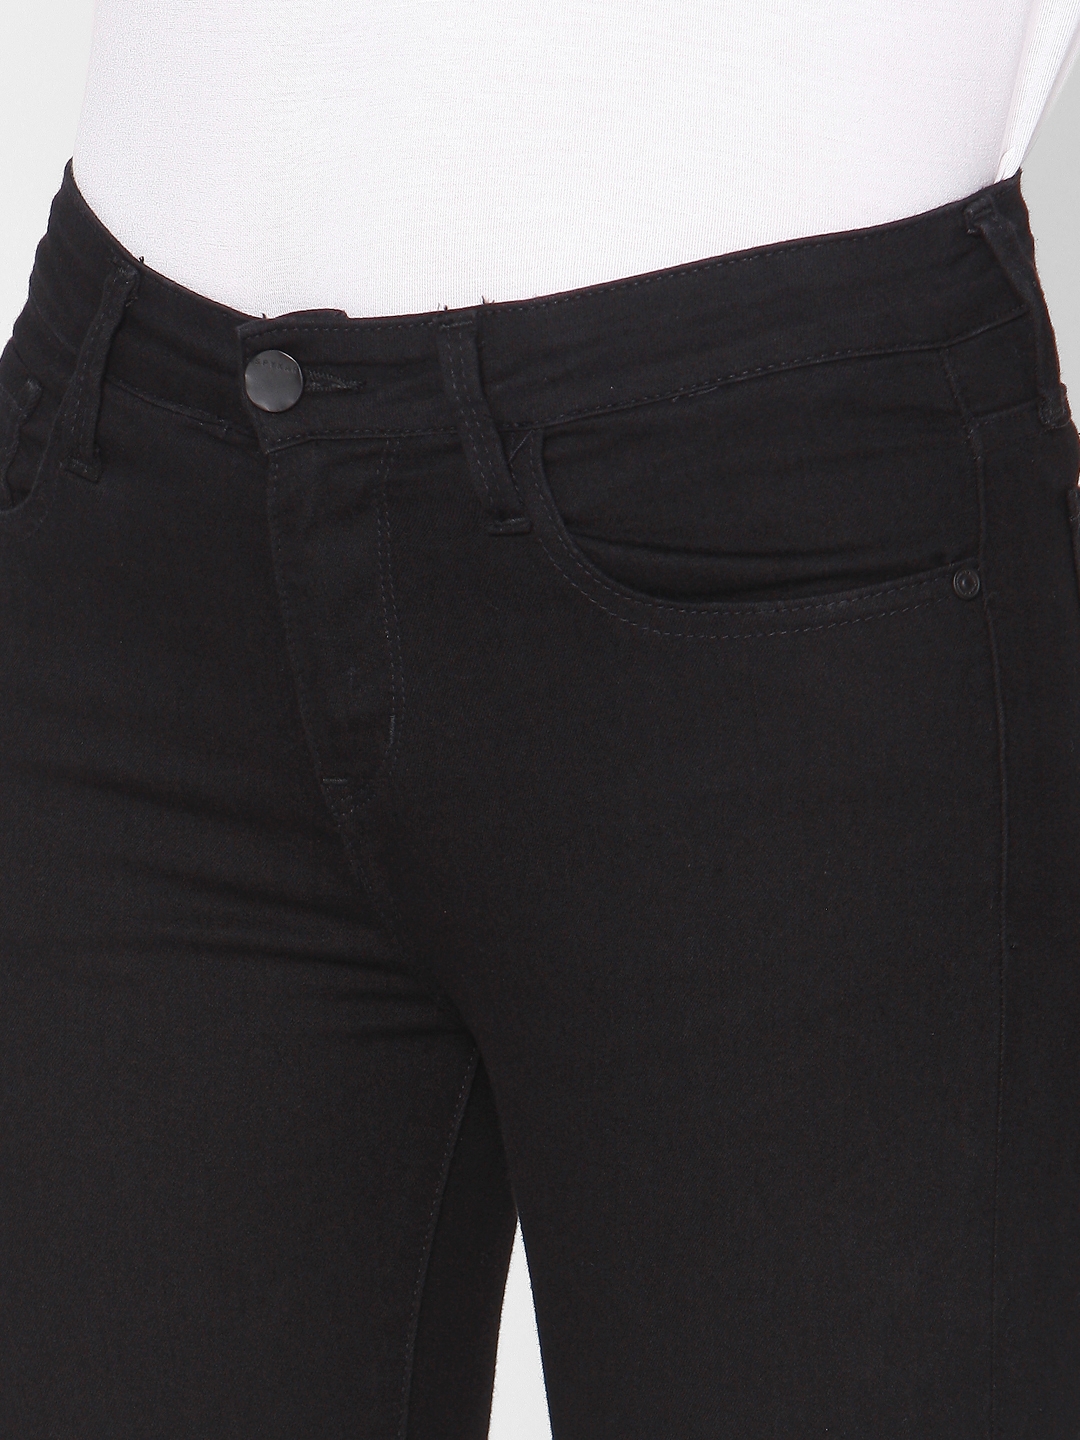 Women's Black Cotton Solid Skinny Jeans